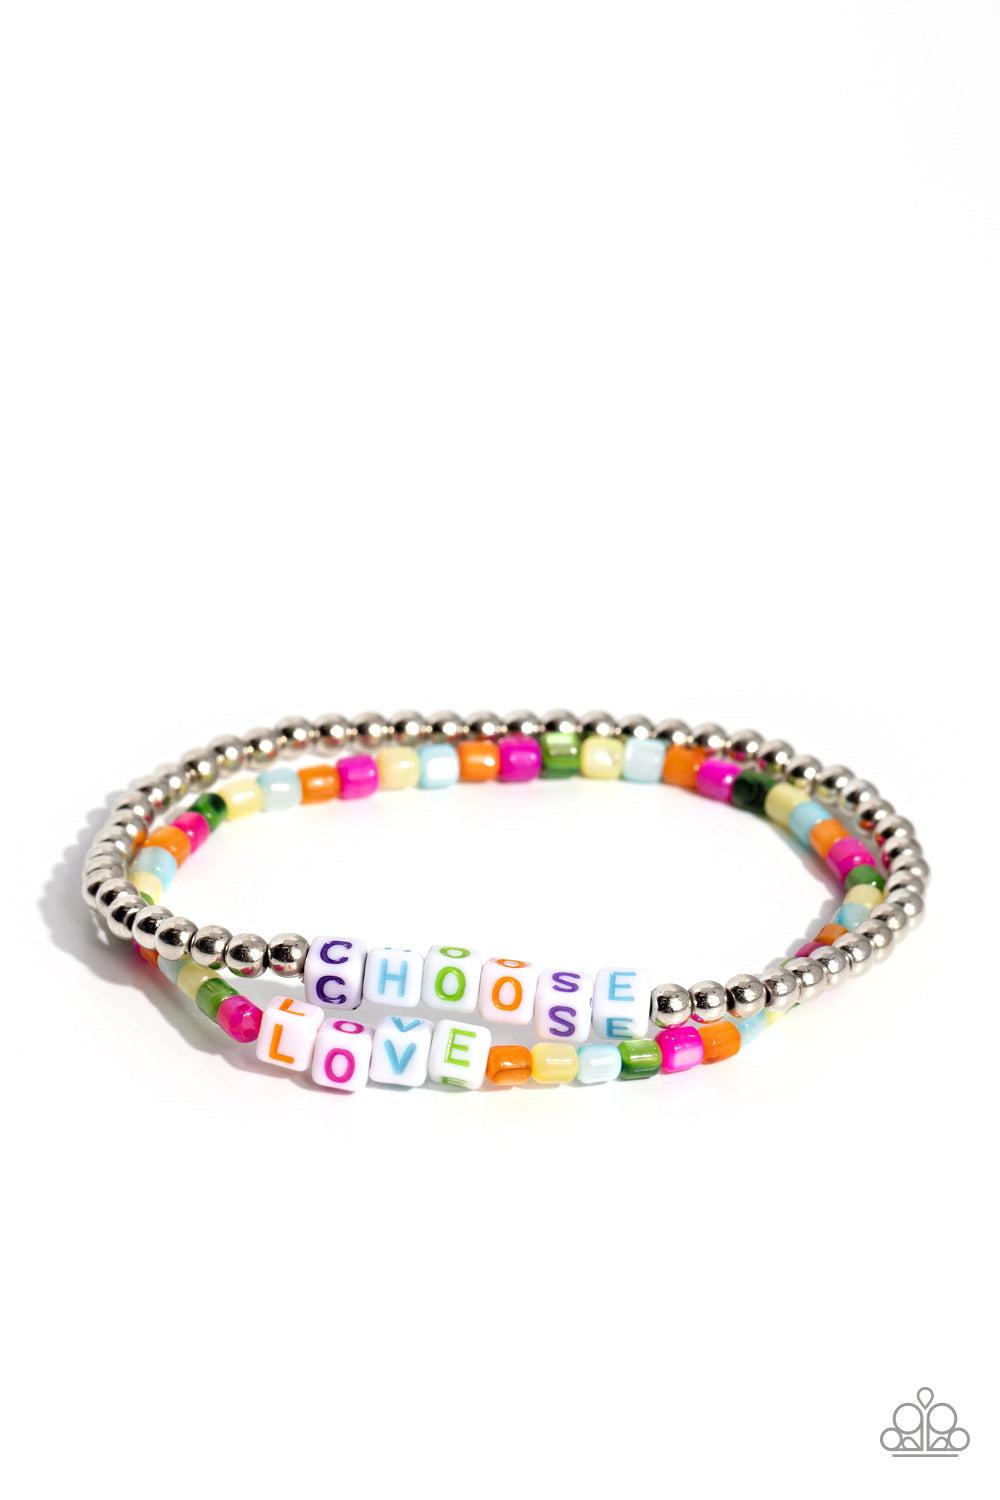 Chasing Love Multi Inspirational Bracelet - Paparazzi Accessories- lightbox - CarasShop.com - $5 Jewelry by Cara Jewels